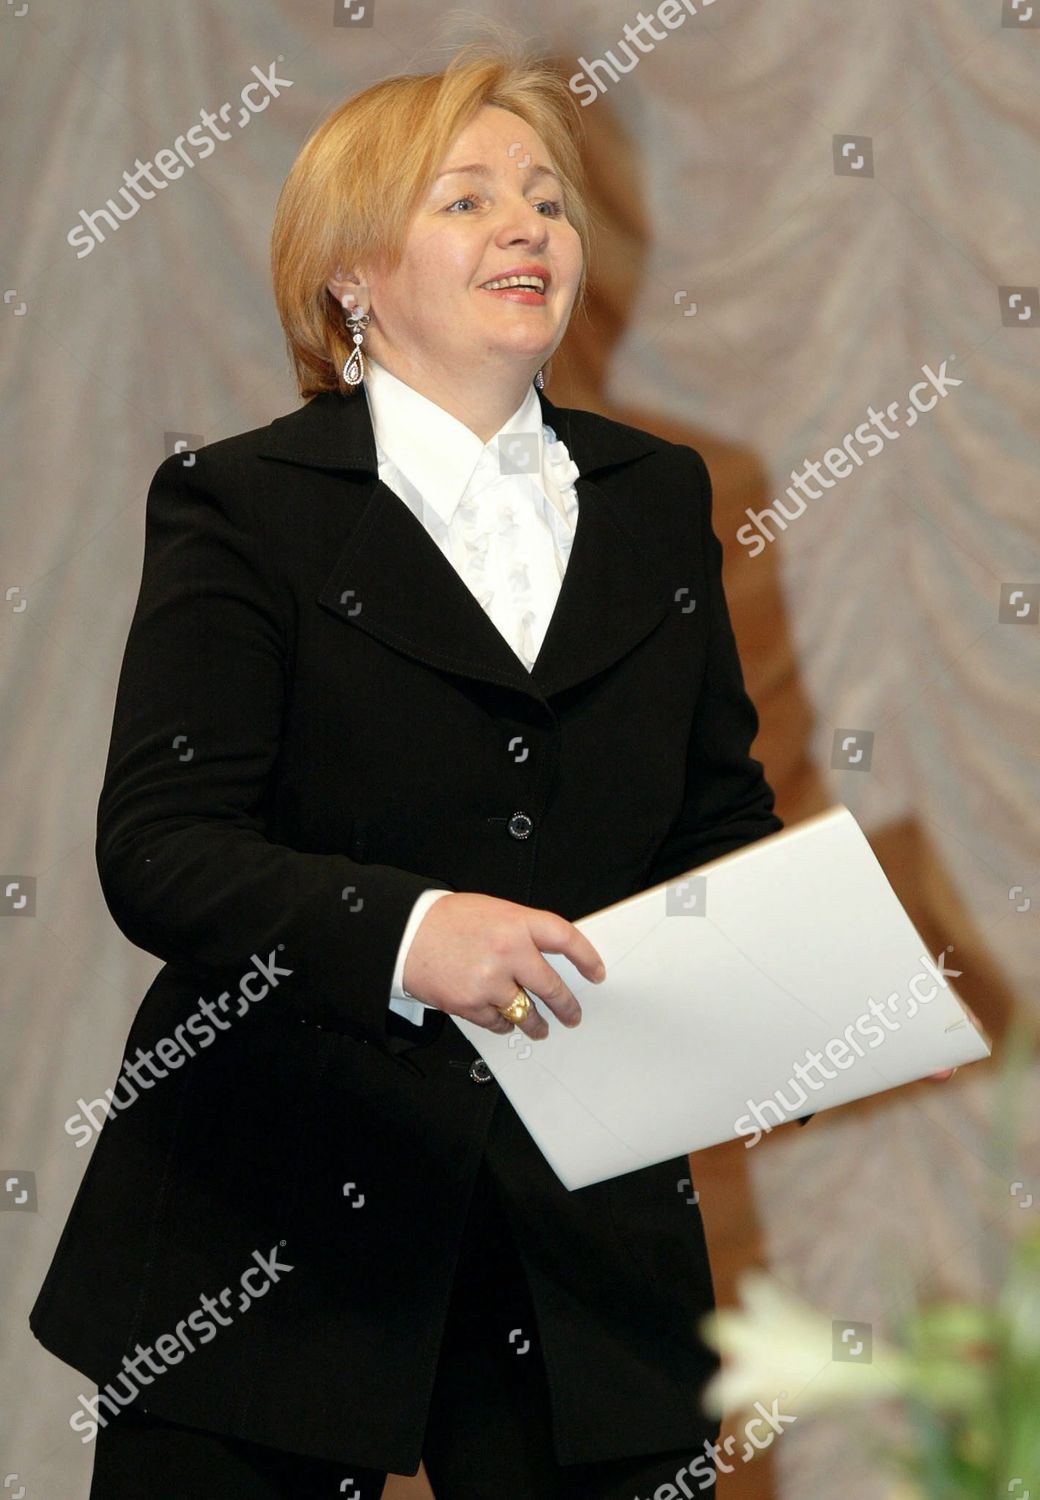 russia-lyudmila-putina-visit-feb-2004-shutterstock-editorial-7857298a.jpg